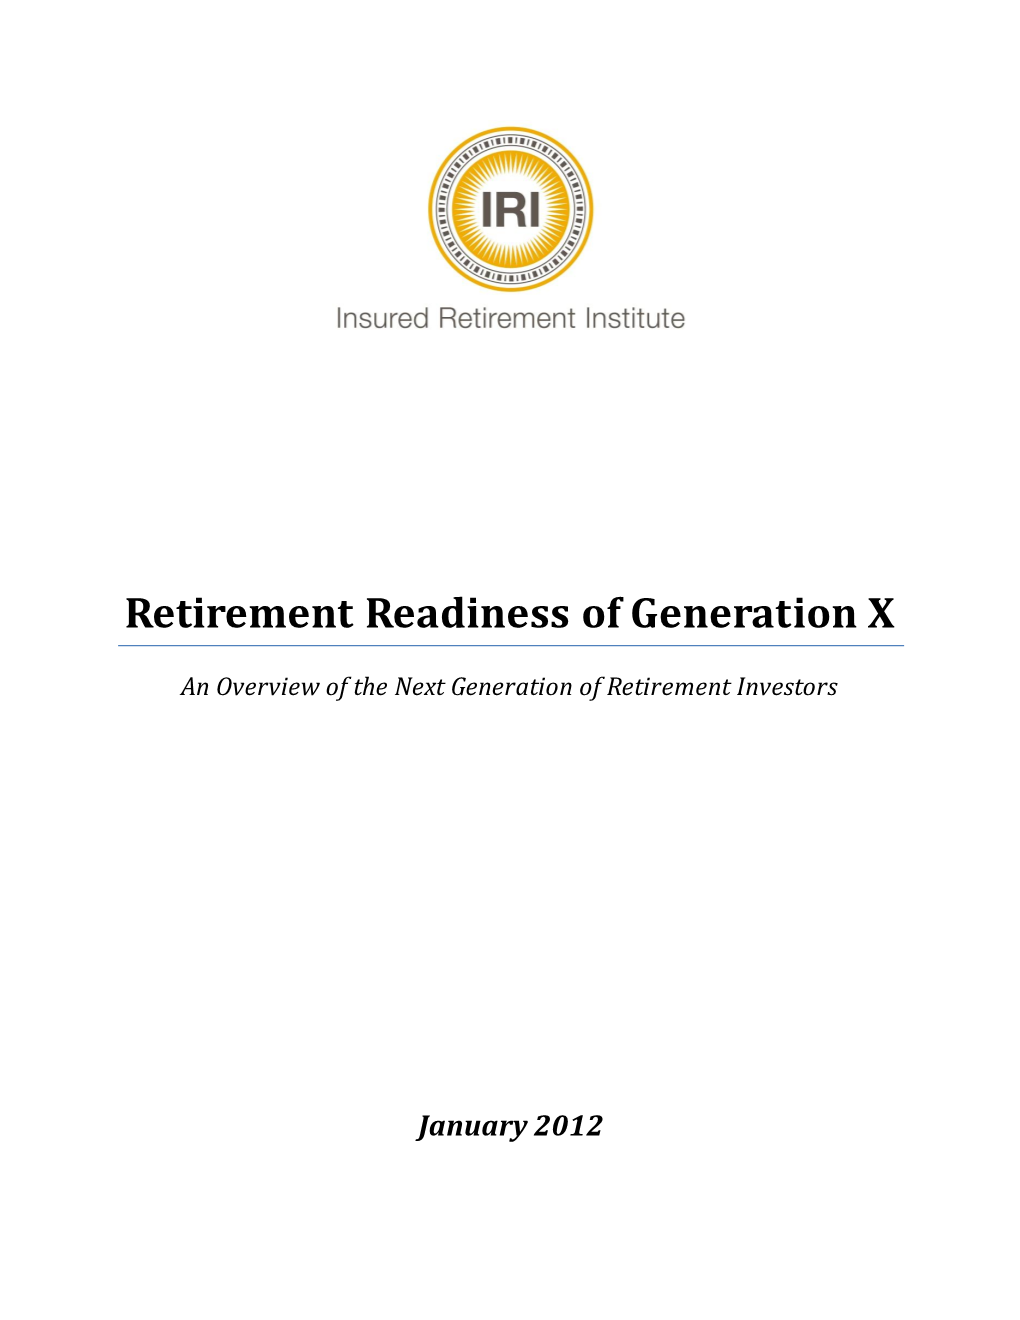 Retirement Readiness of Generation X